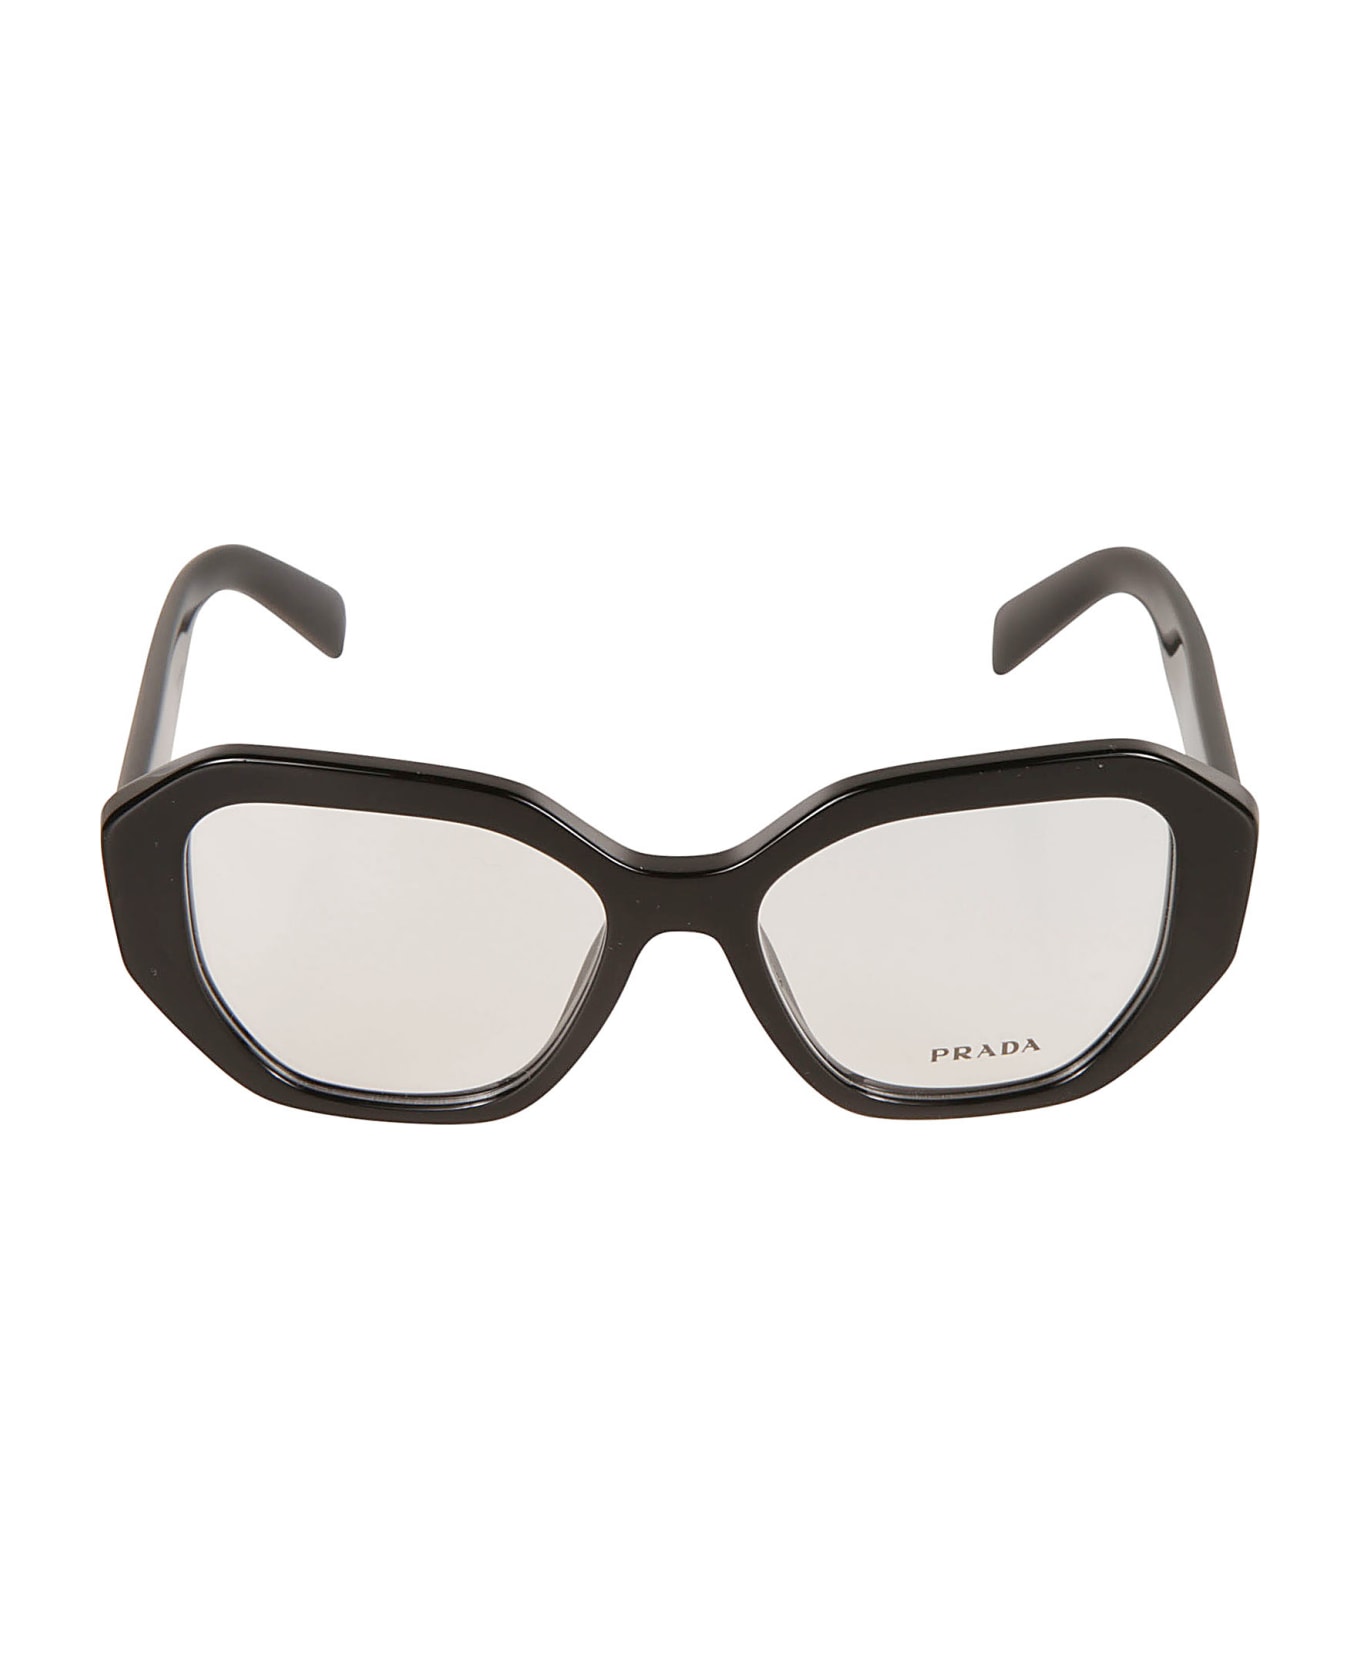 Prada Eyewear A07v Vista Frame - 1AB1O1